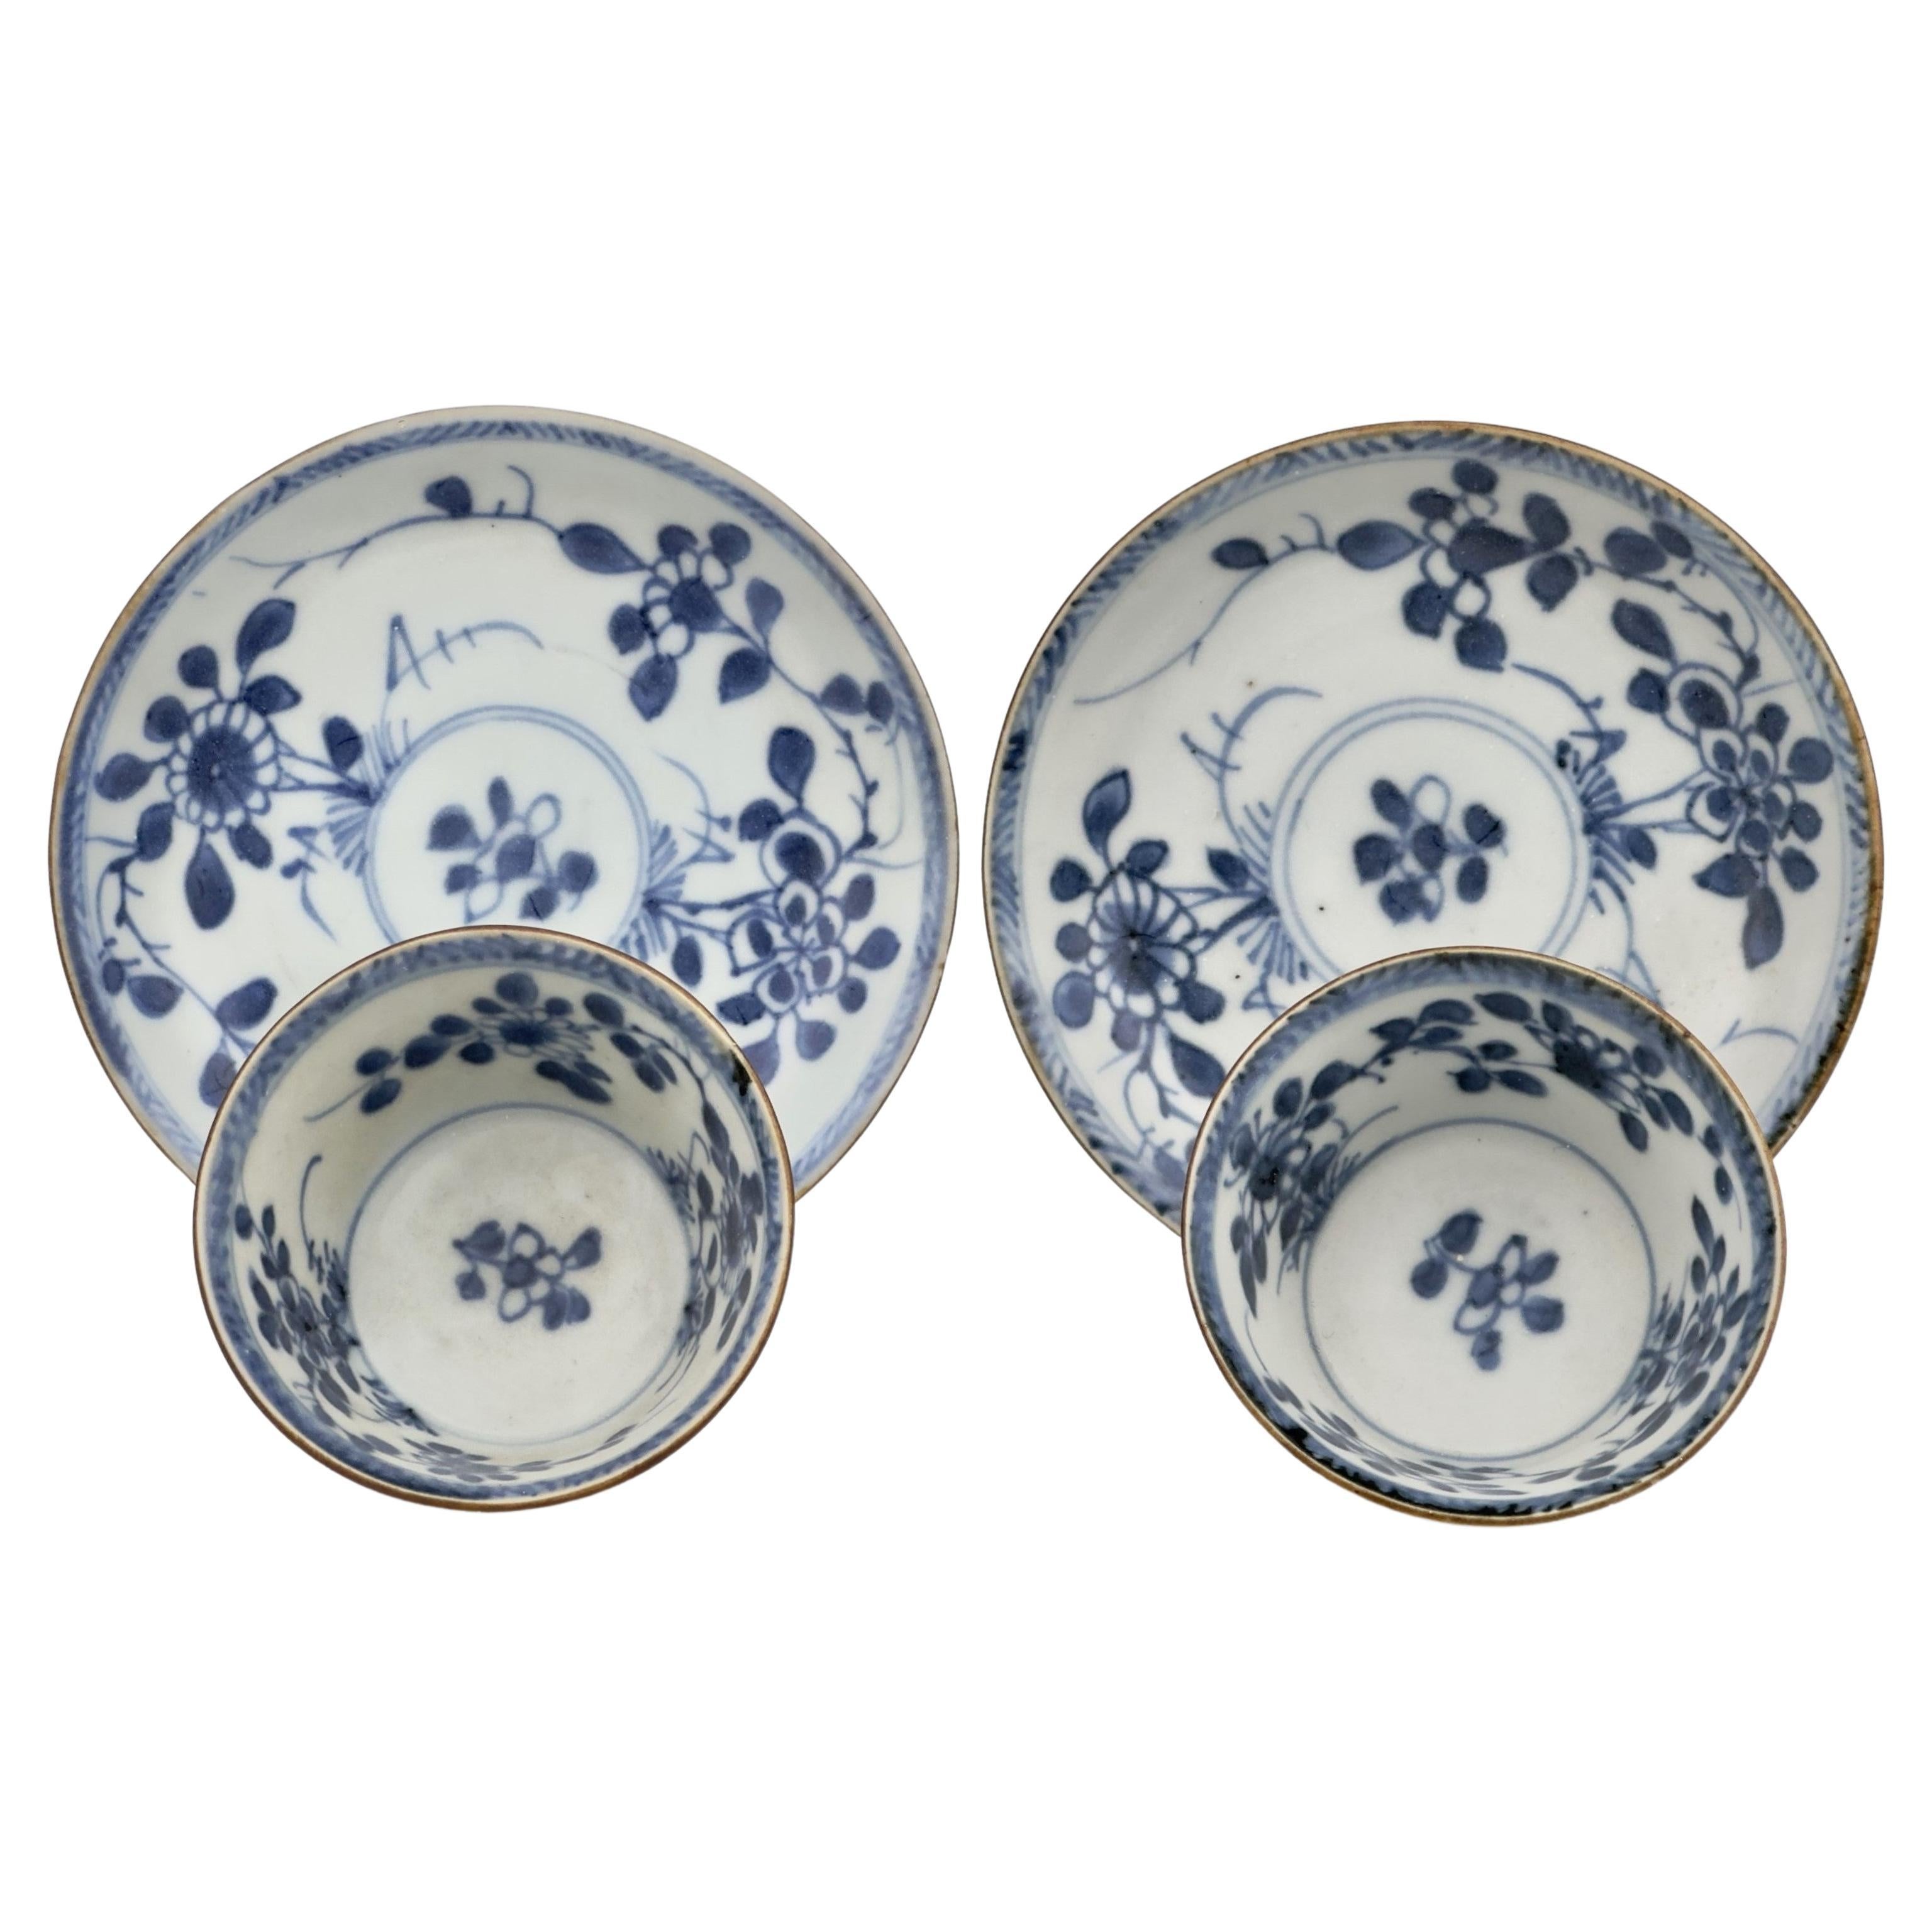 Teeservice mit blau-weißem Blumenmuster C 1725, Qing Dynastie, Yongzheng Ära